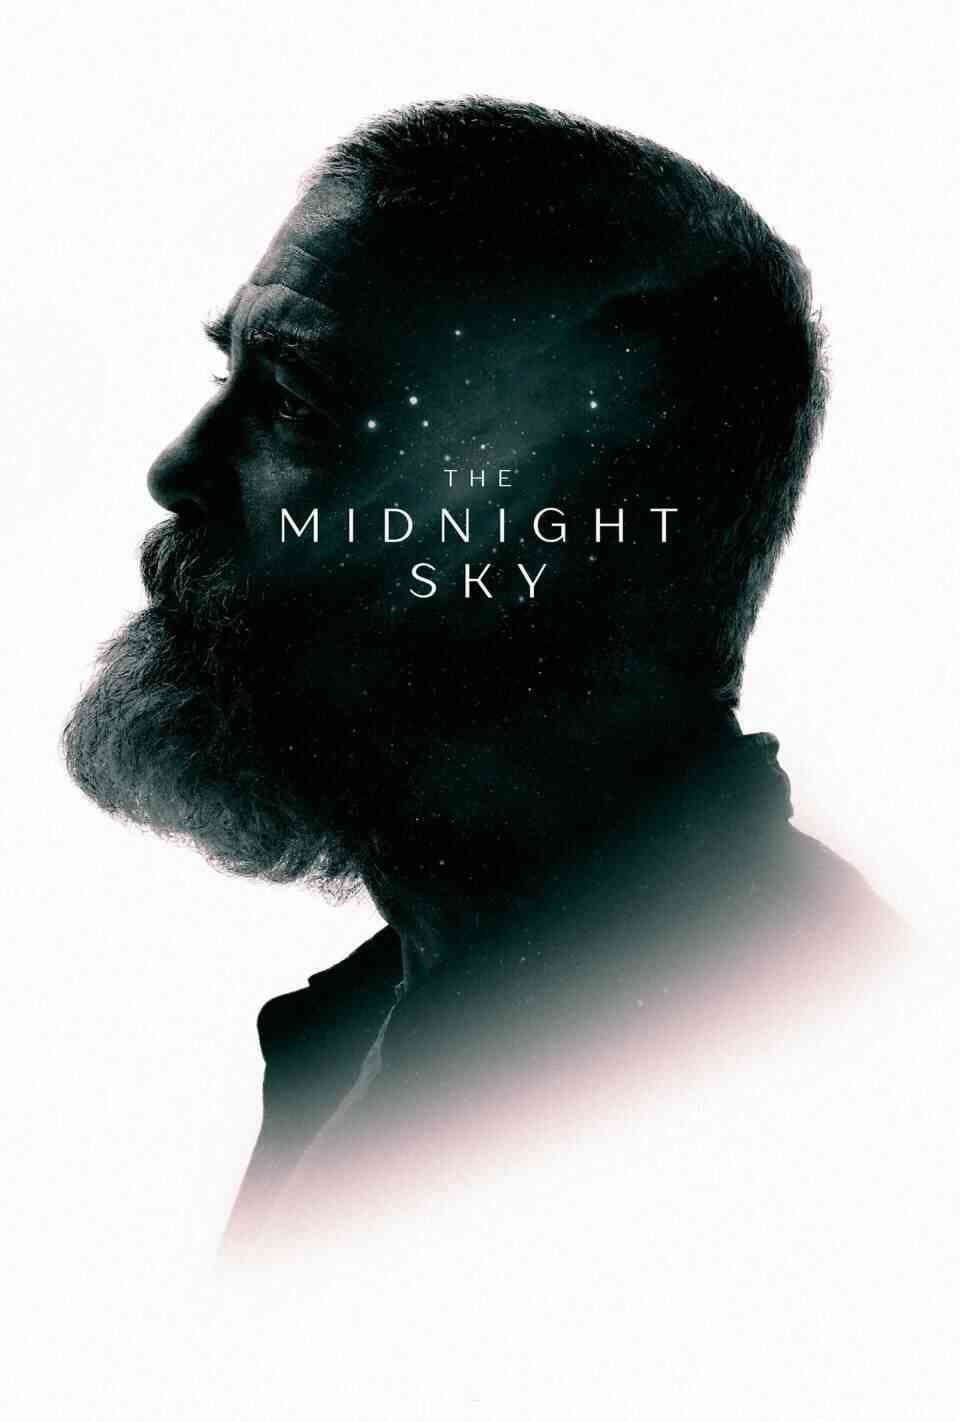 Read The Midnight Sky screenplay.